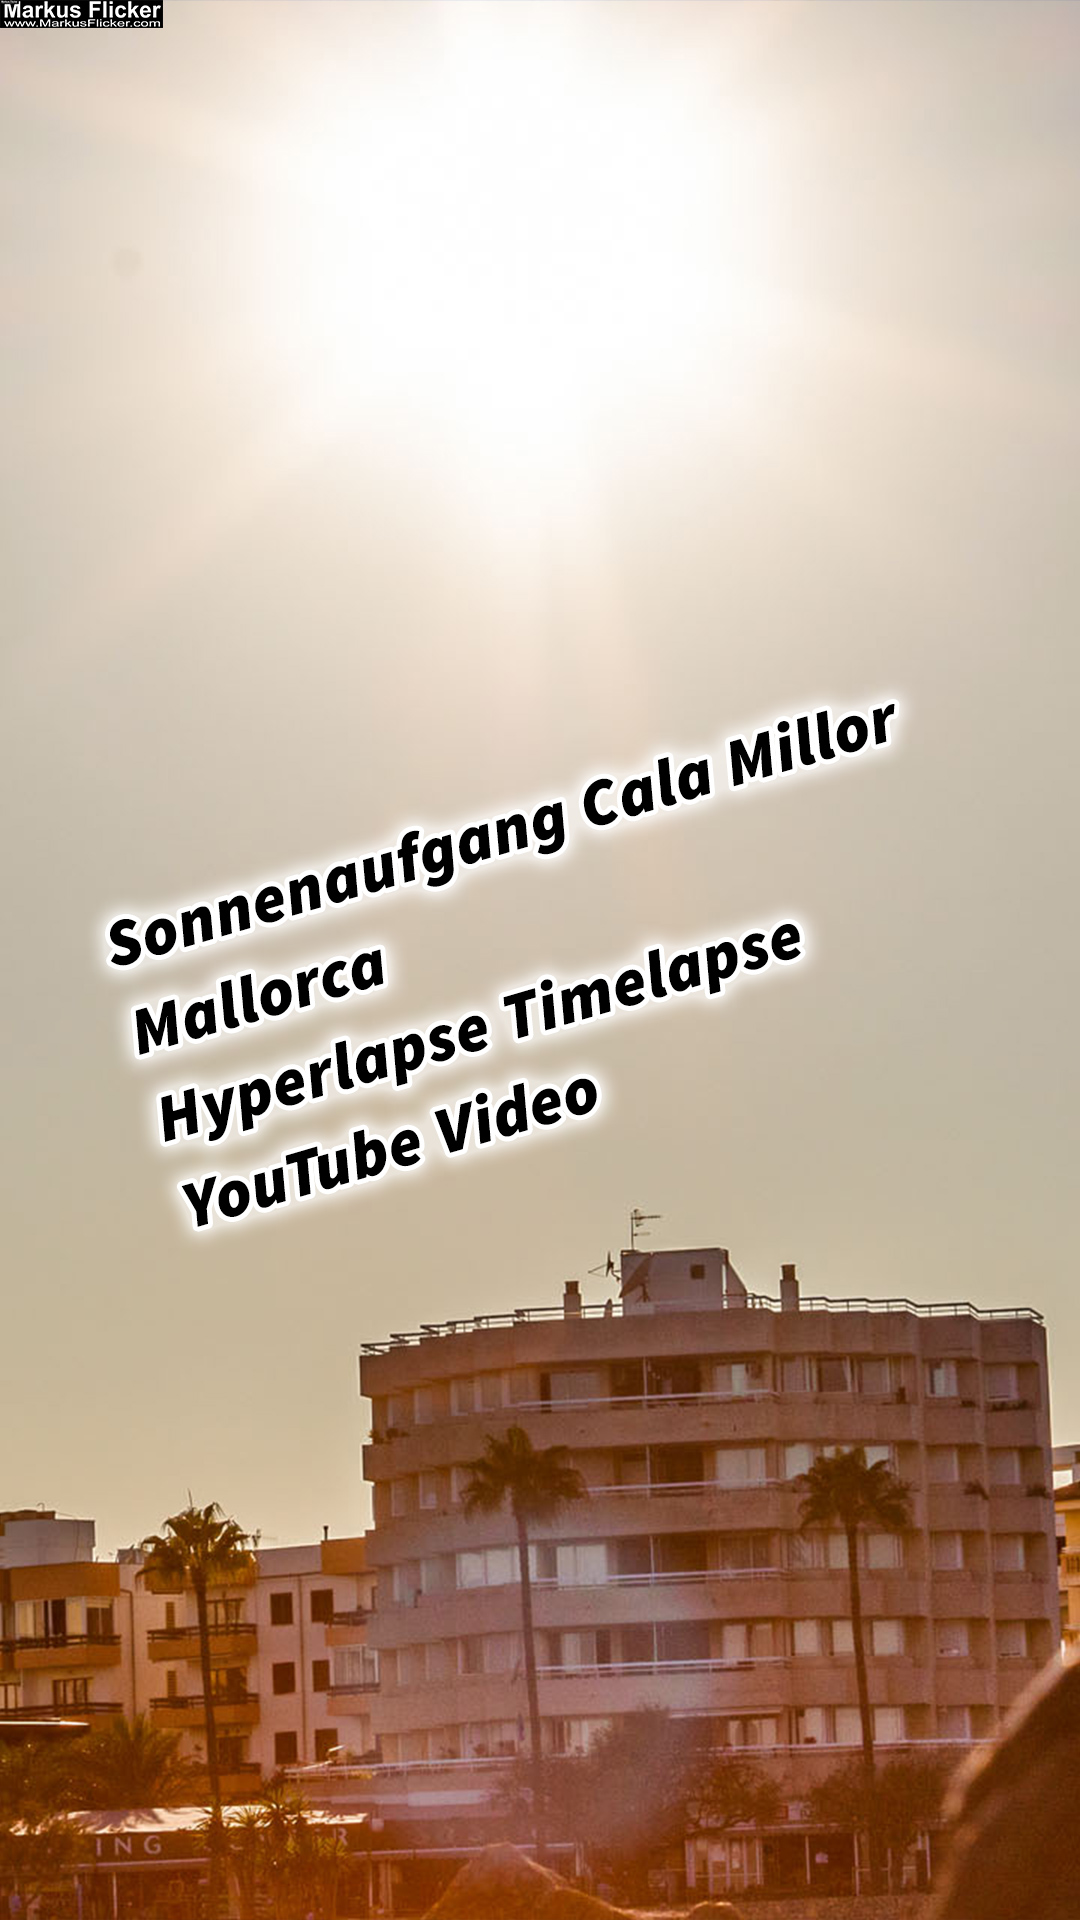 Sonnenaufgang Cala Millor Mallorca Hyperlapse Timelapse YouTube Video